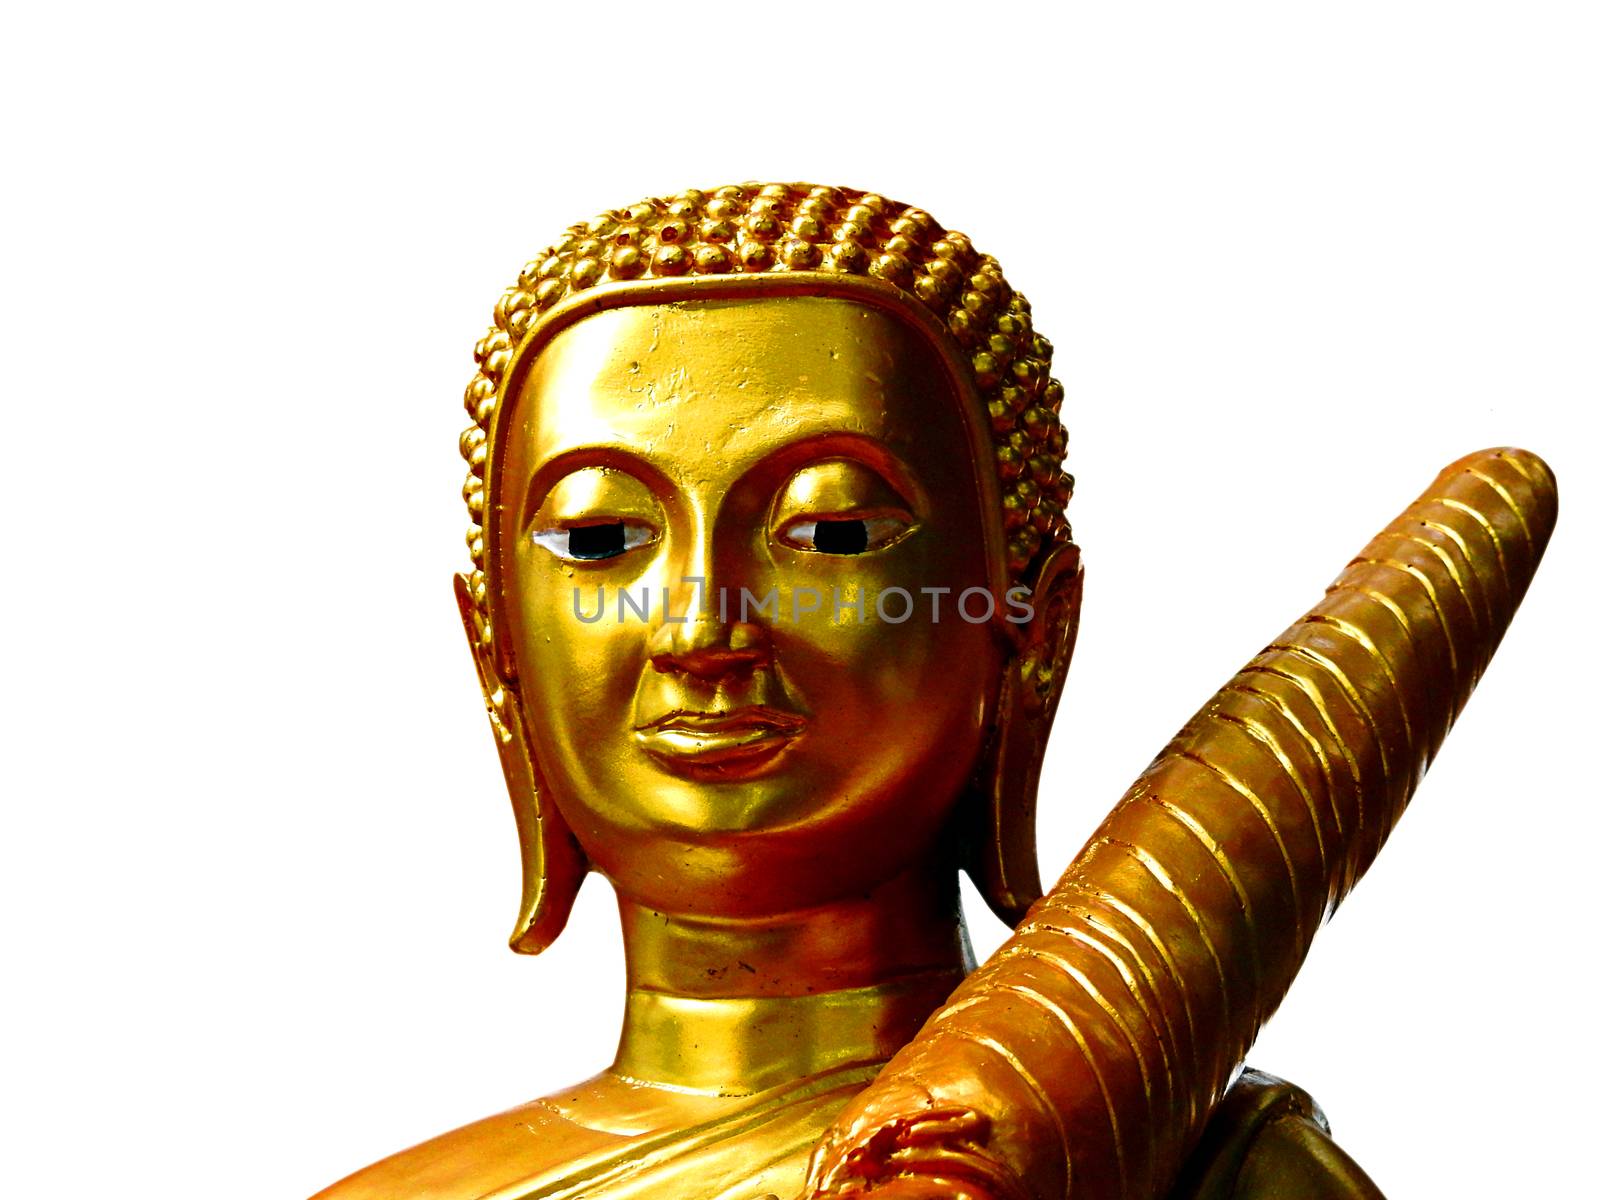 Golden buddha statue isolated on white background.